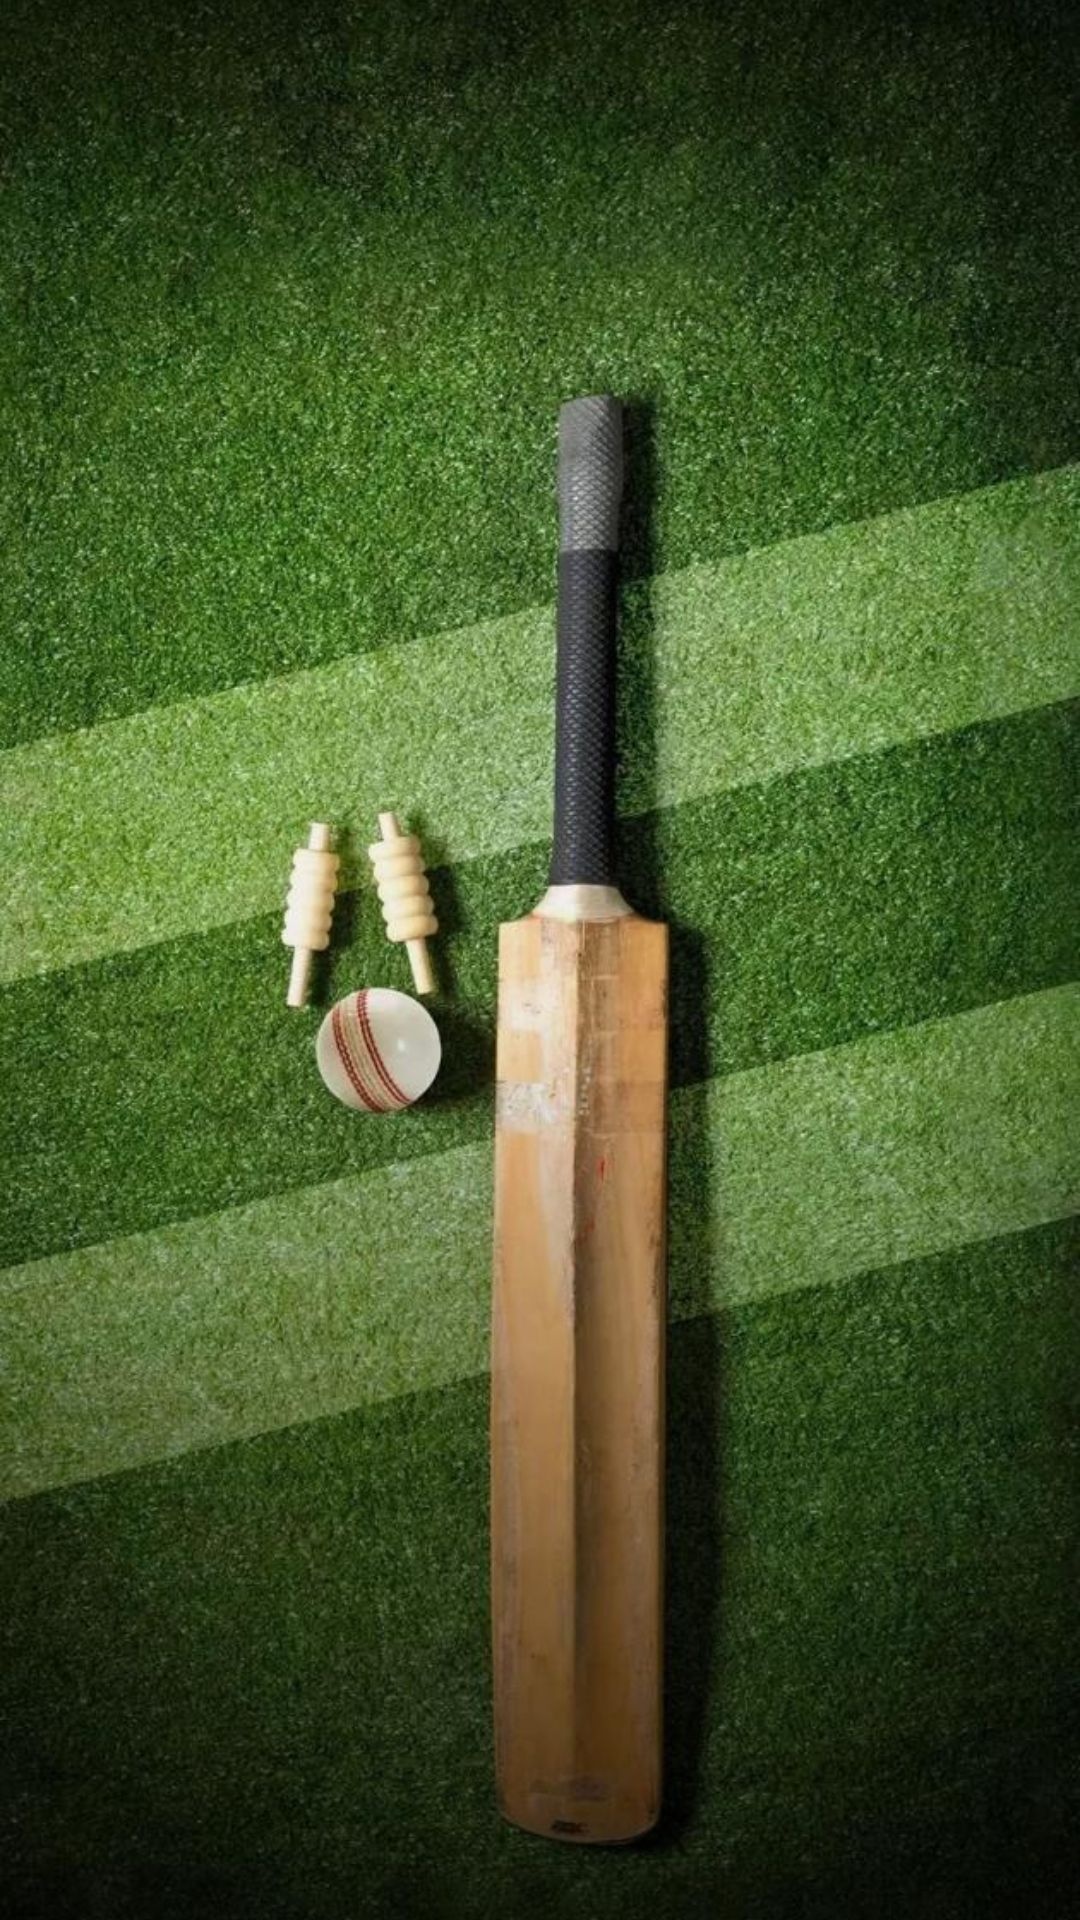 Cricket: A bat and a ball, Batters' equipment, Outdoor recreation and sport. 1080x1920 Full HD Wallpaper.